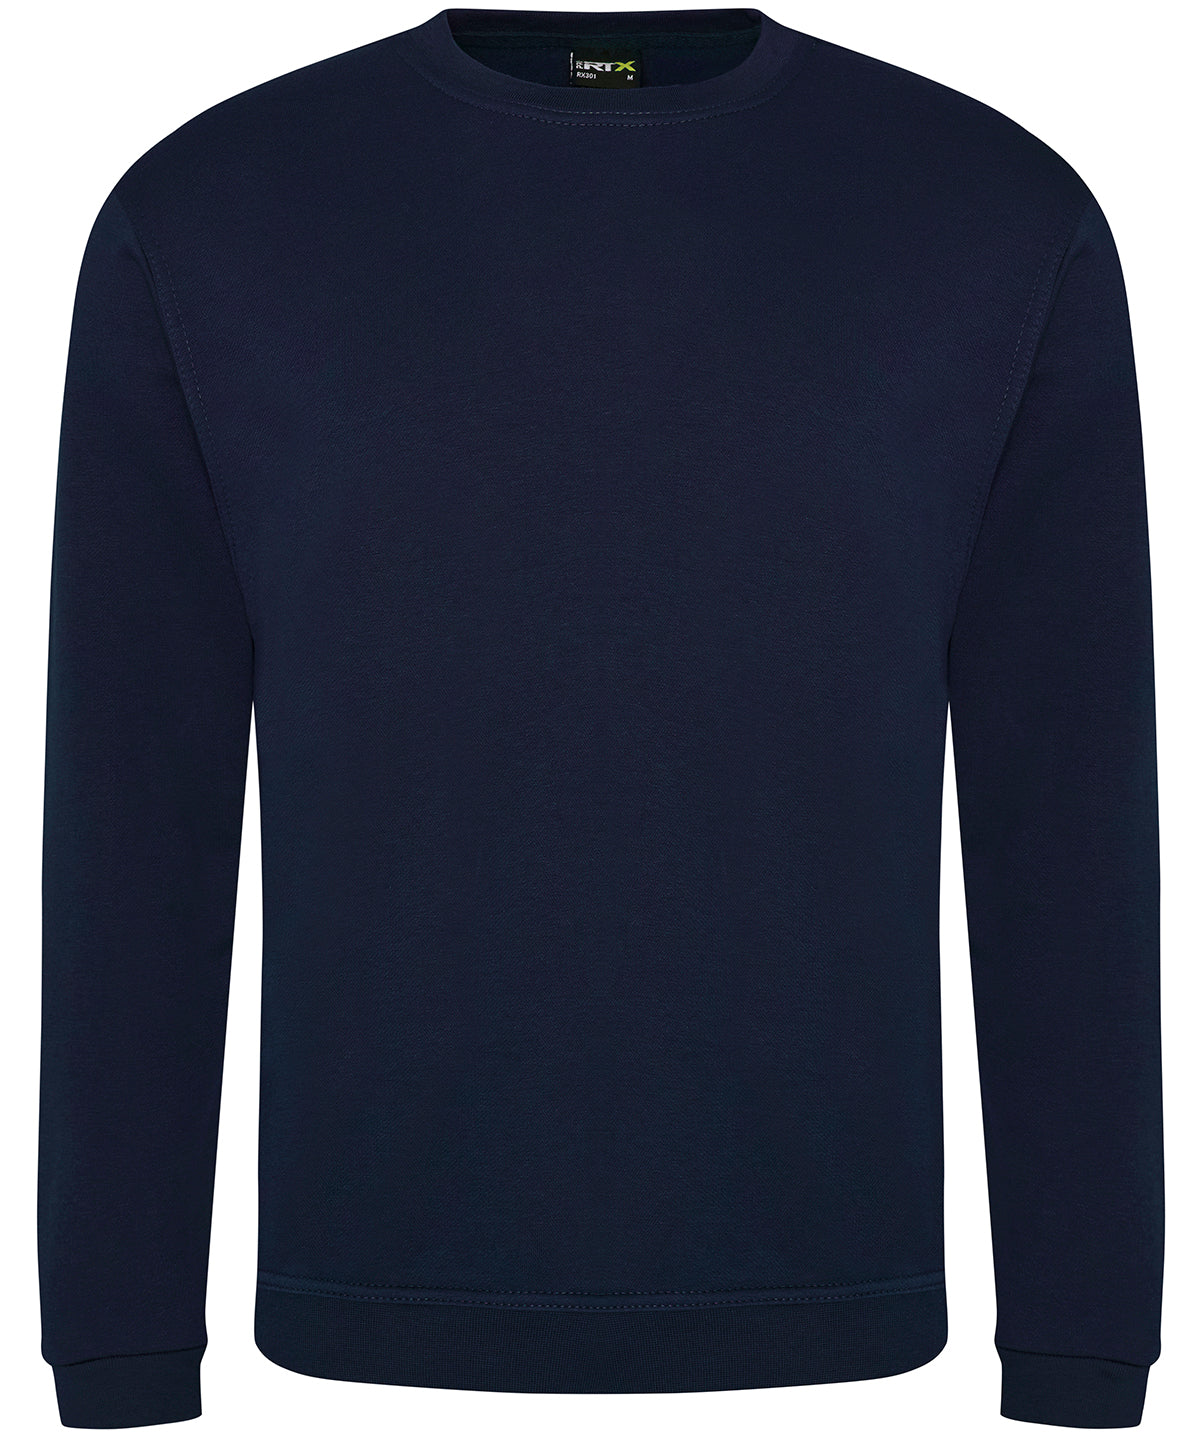 Personalised Sweatshirts - ProRTX Pro sweatshirt